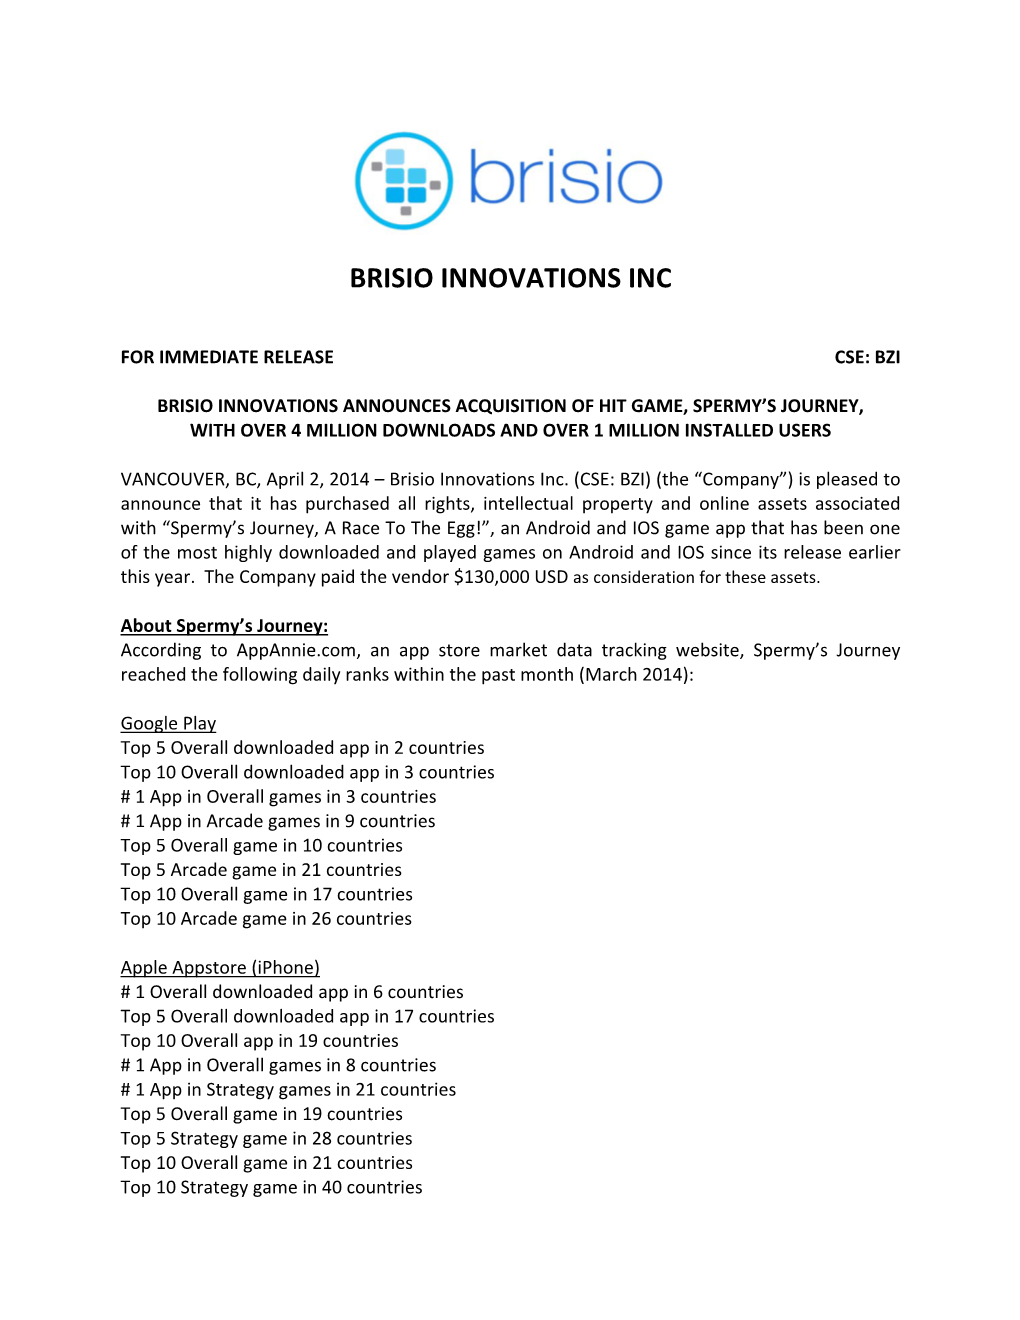 Brisio Innovations Inc